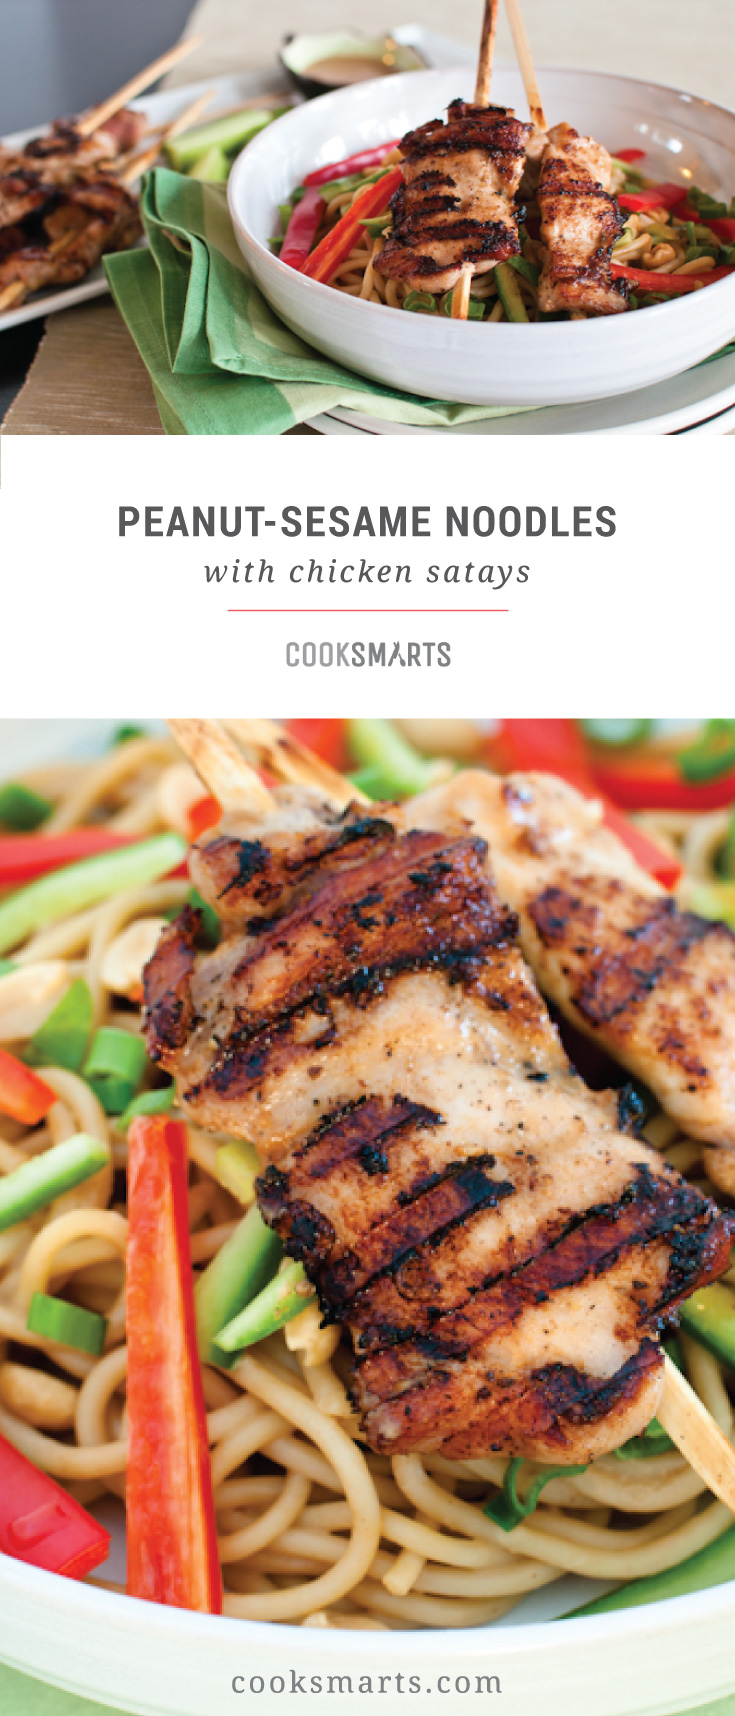 Peanut-Sesame Noodles with Chicken Satay | Cook Smarts Recipe